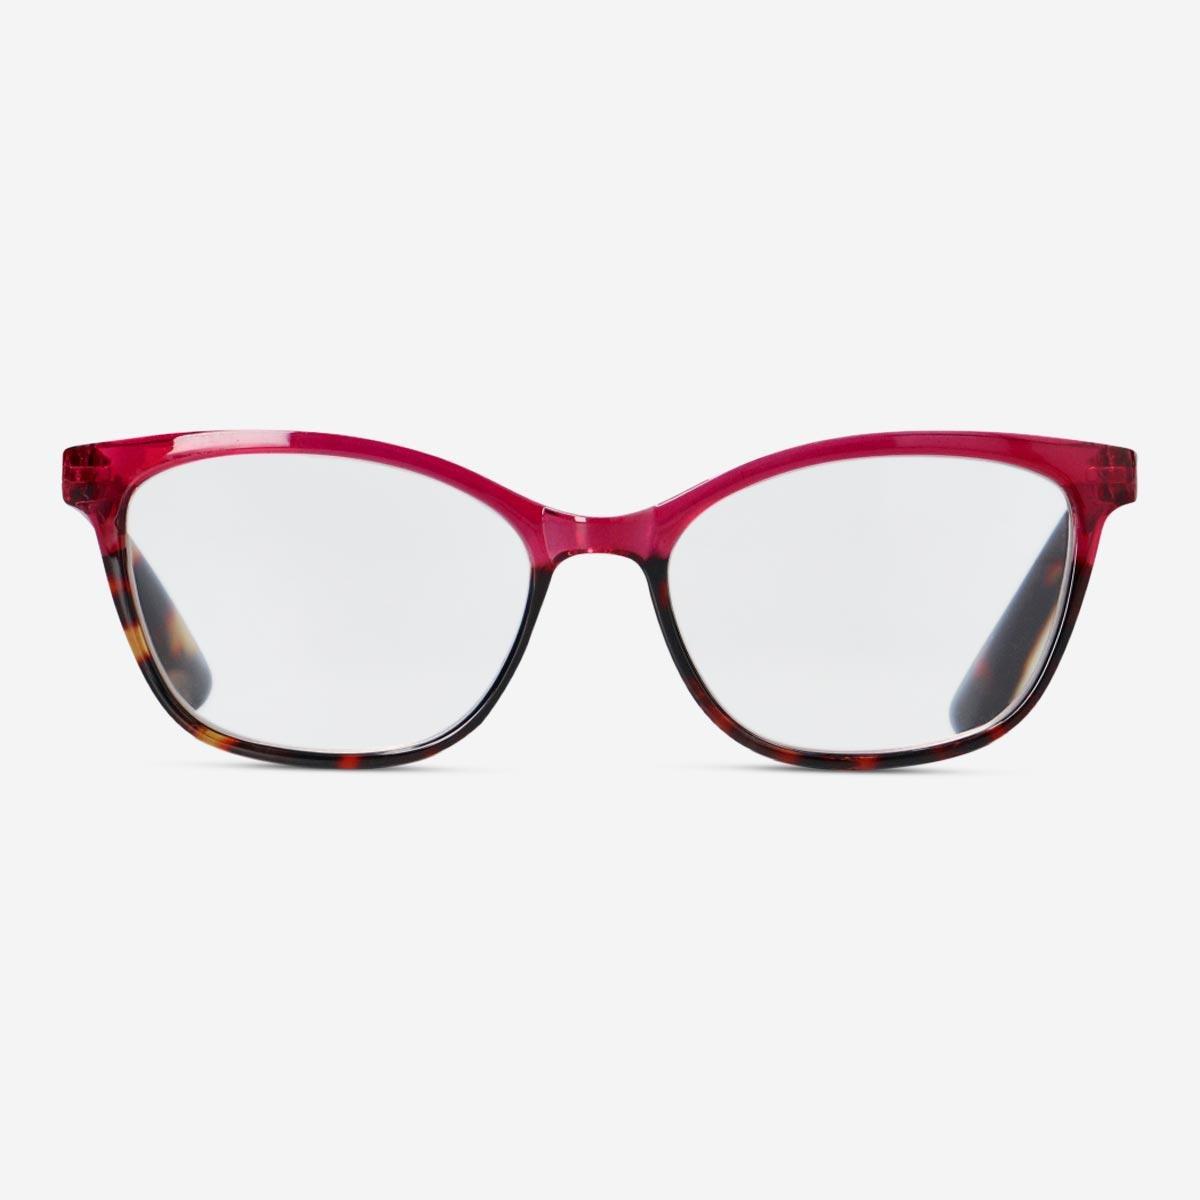 Pink reading glasses. + 3.0